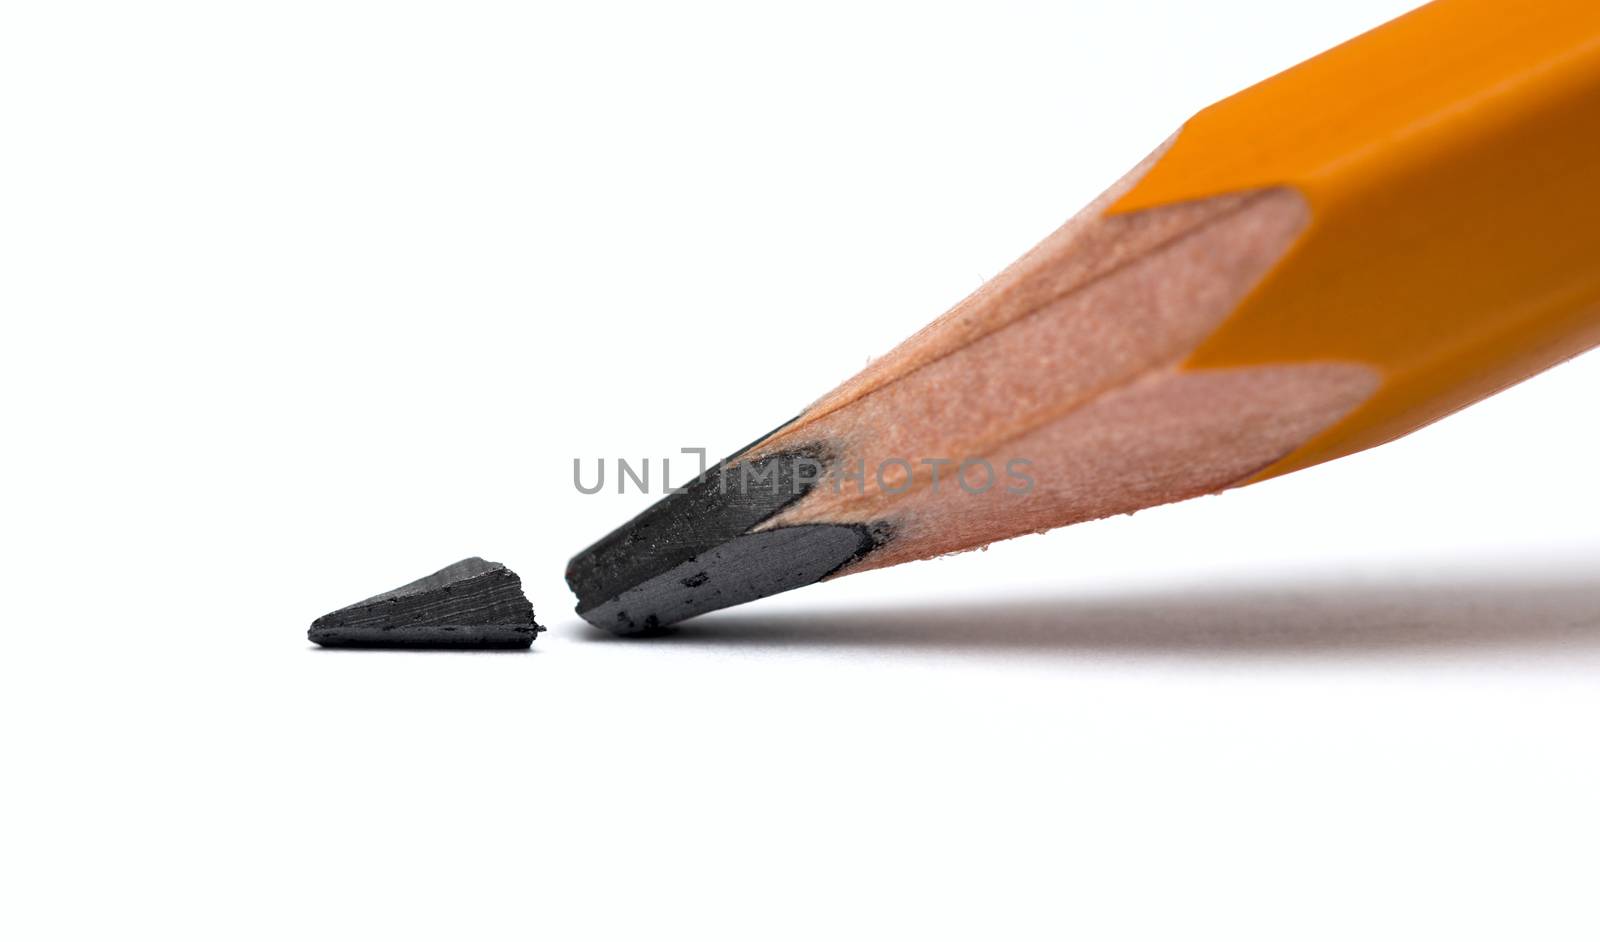 Broken head of sharp pencil on a white paper by DNKSTUDIO